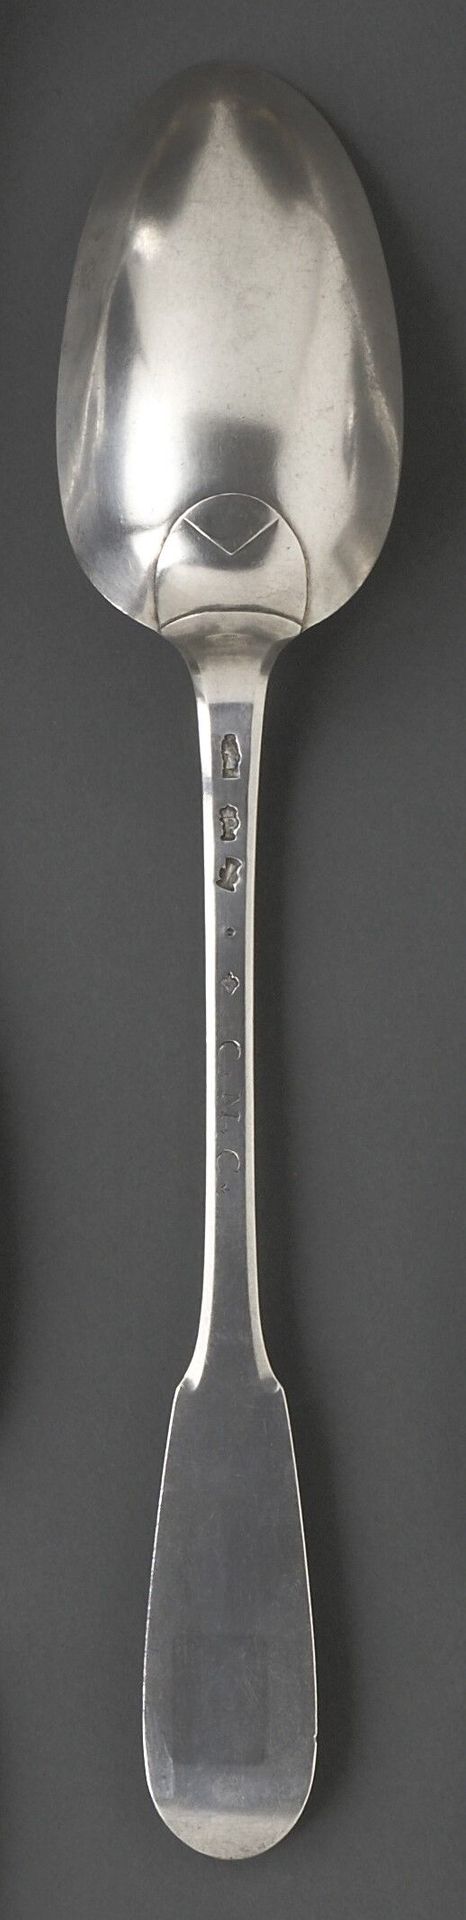 Null 单平银炖汤匙

博纳，1785年

金匠大师：Denis ROUGEOT，1775年获得。

重量：154 g BL